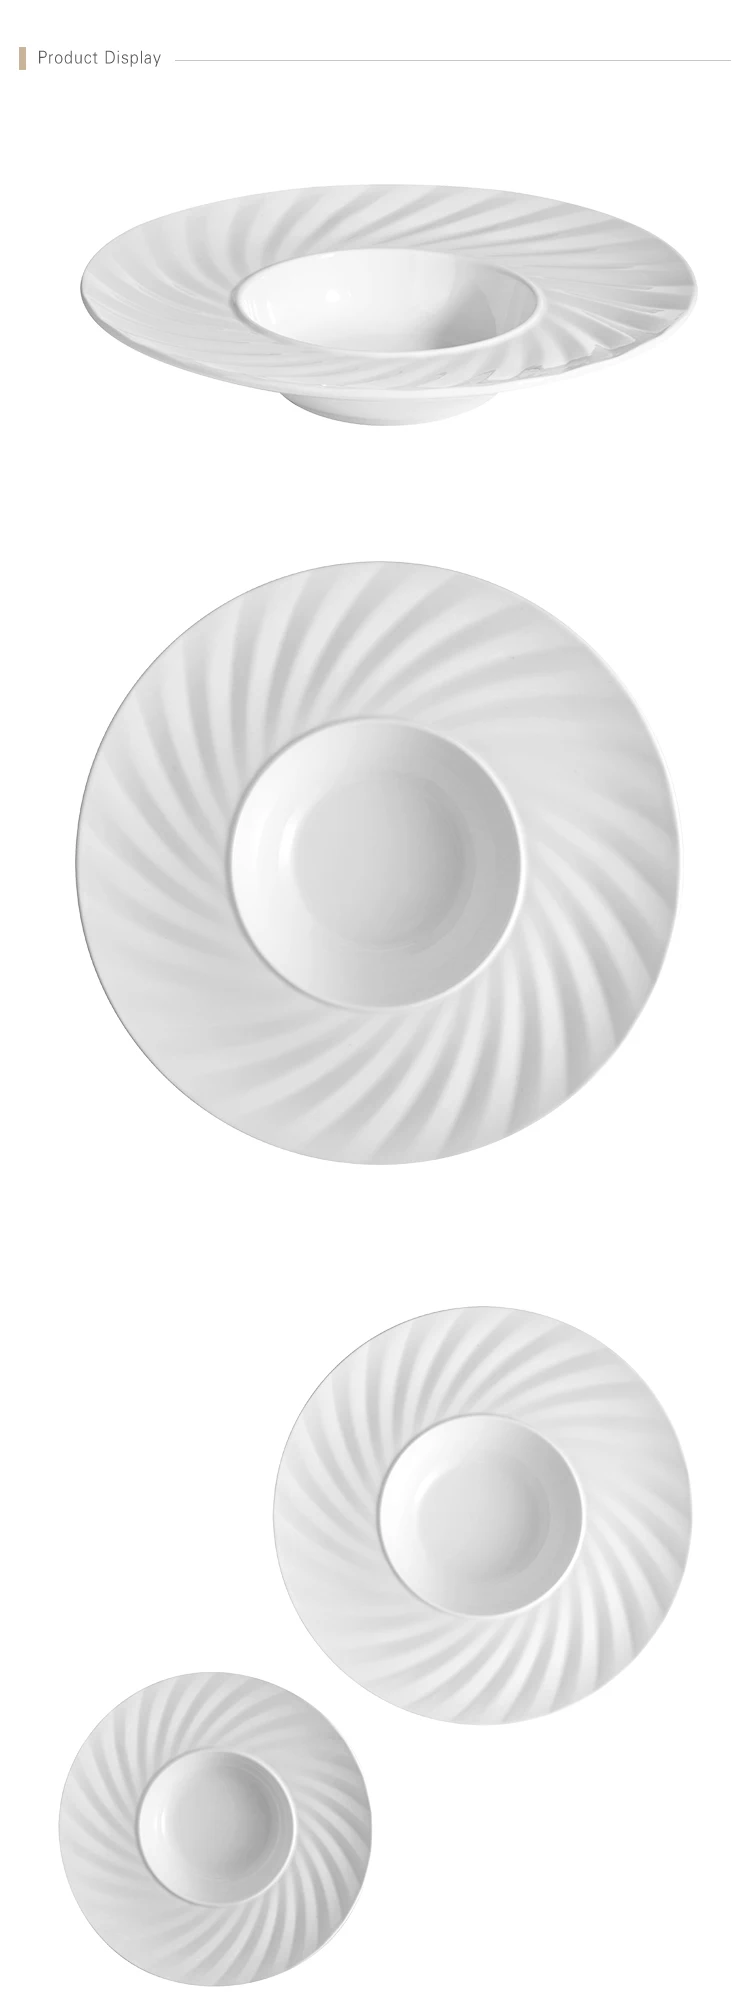 Cafe Pasta 9.25" White Porcelain Dish Set White Round Salad Ceramic Dessert Plates